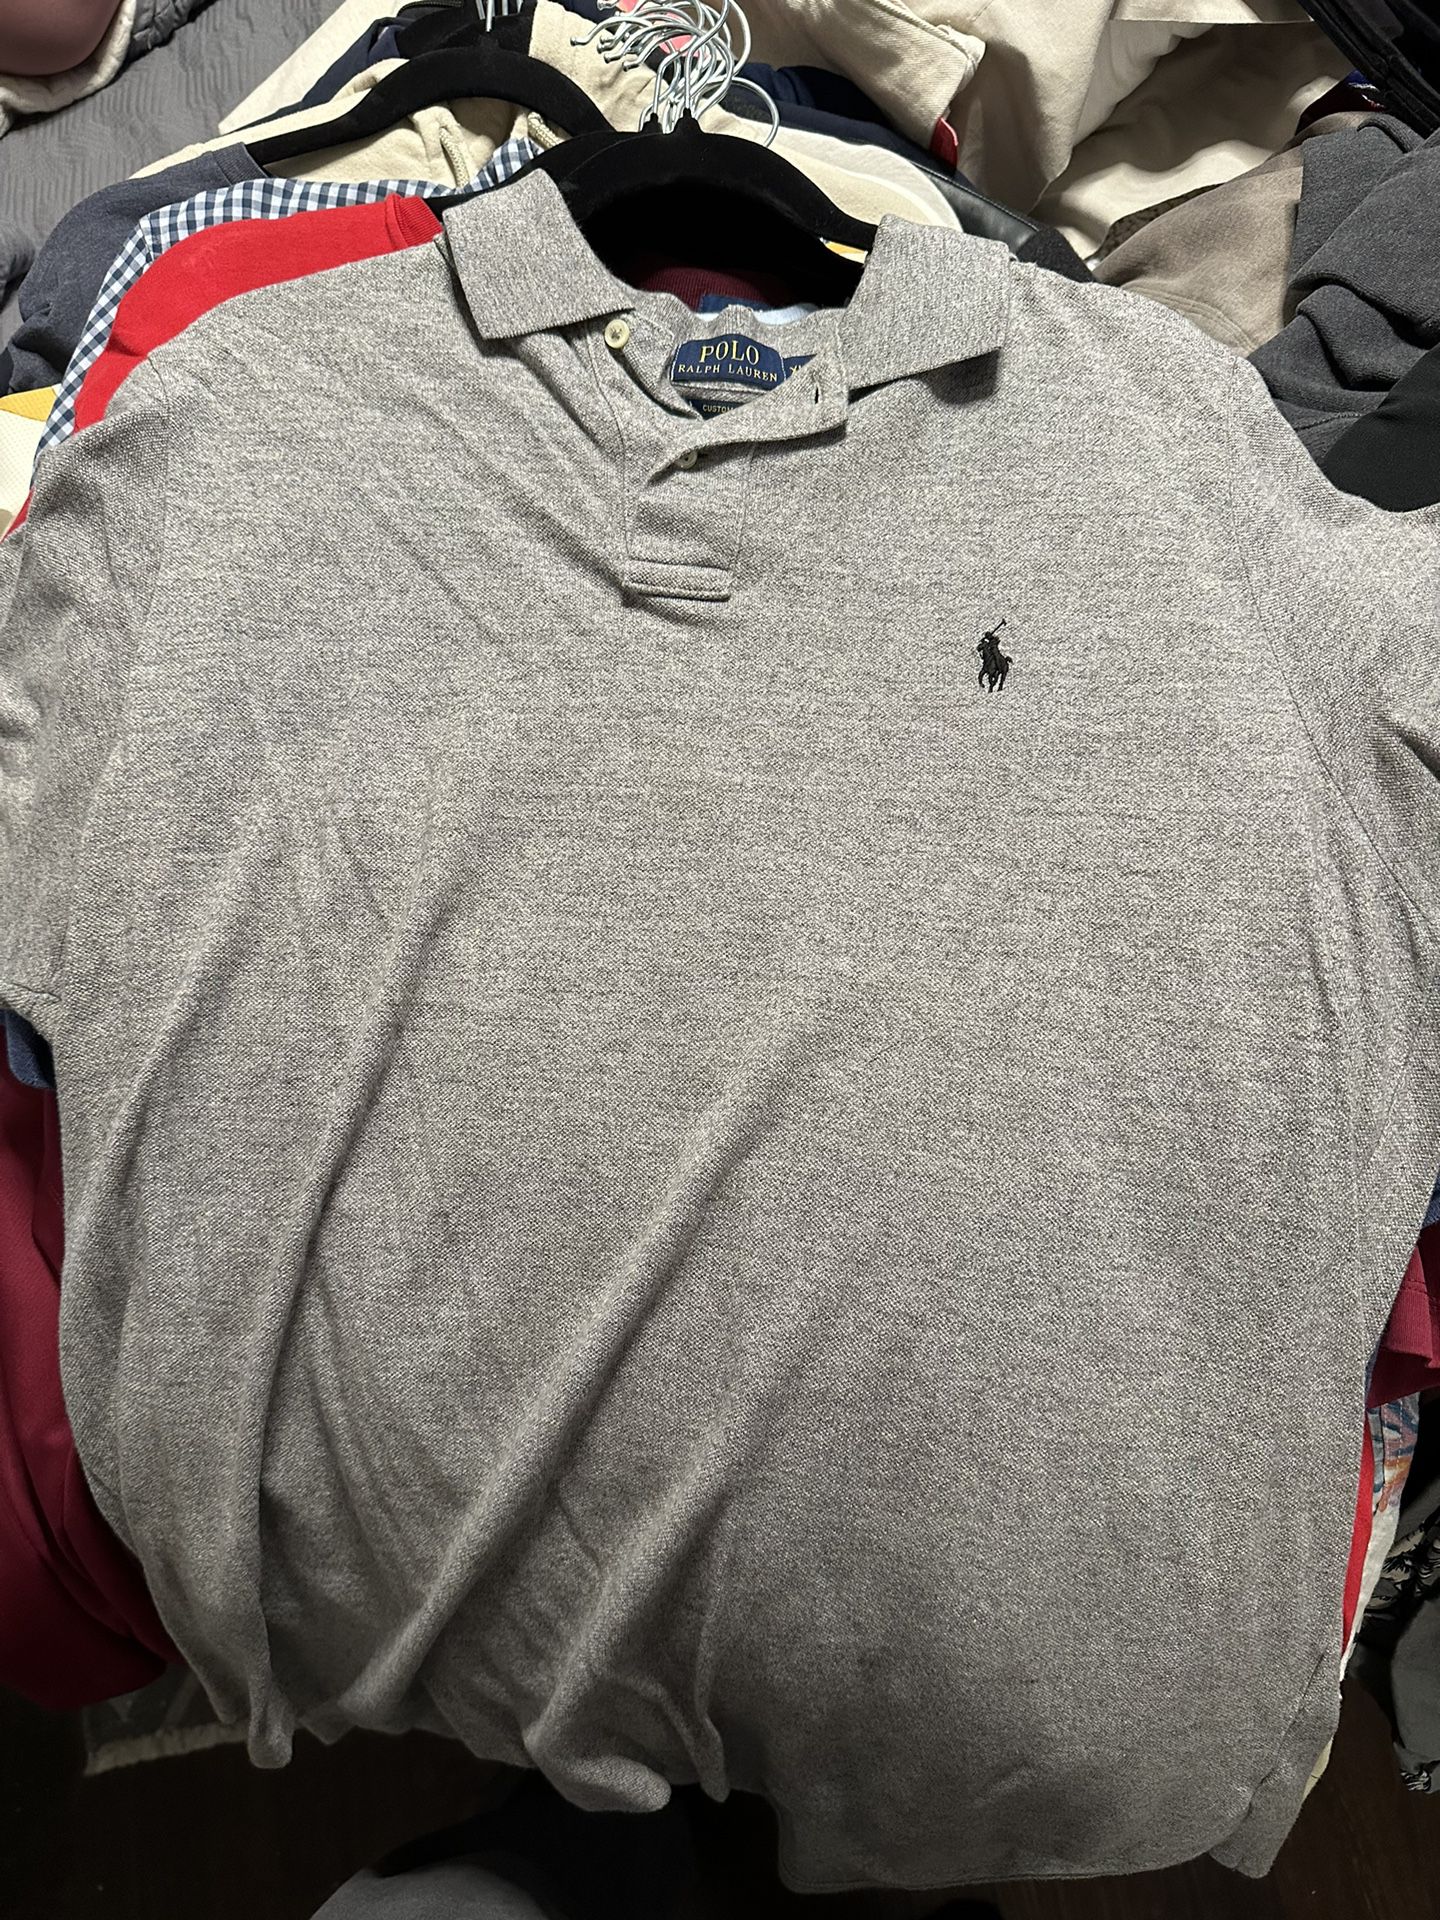 Polo Ralph Lauren Collared Shirt.